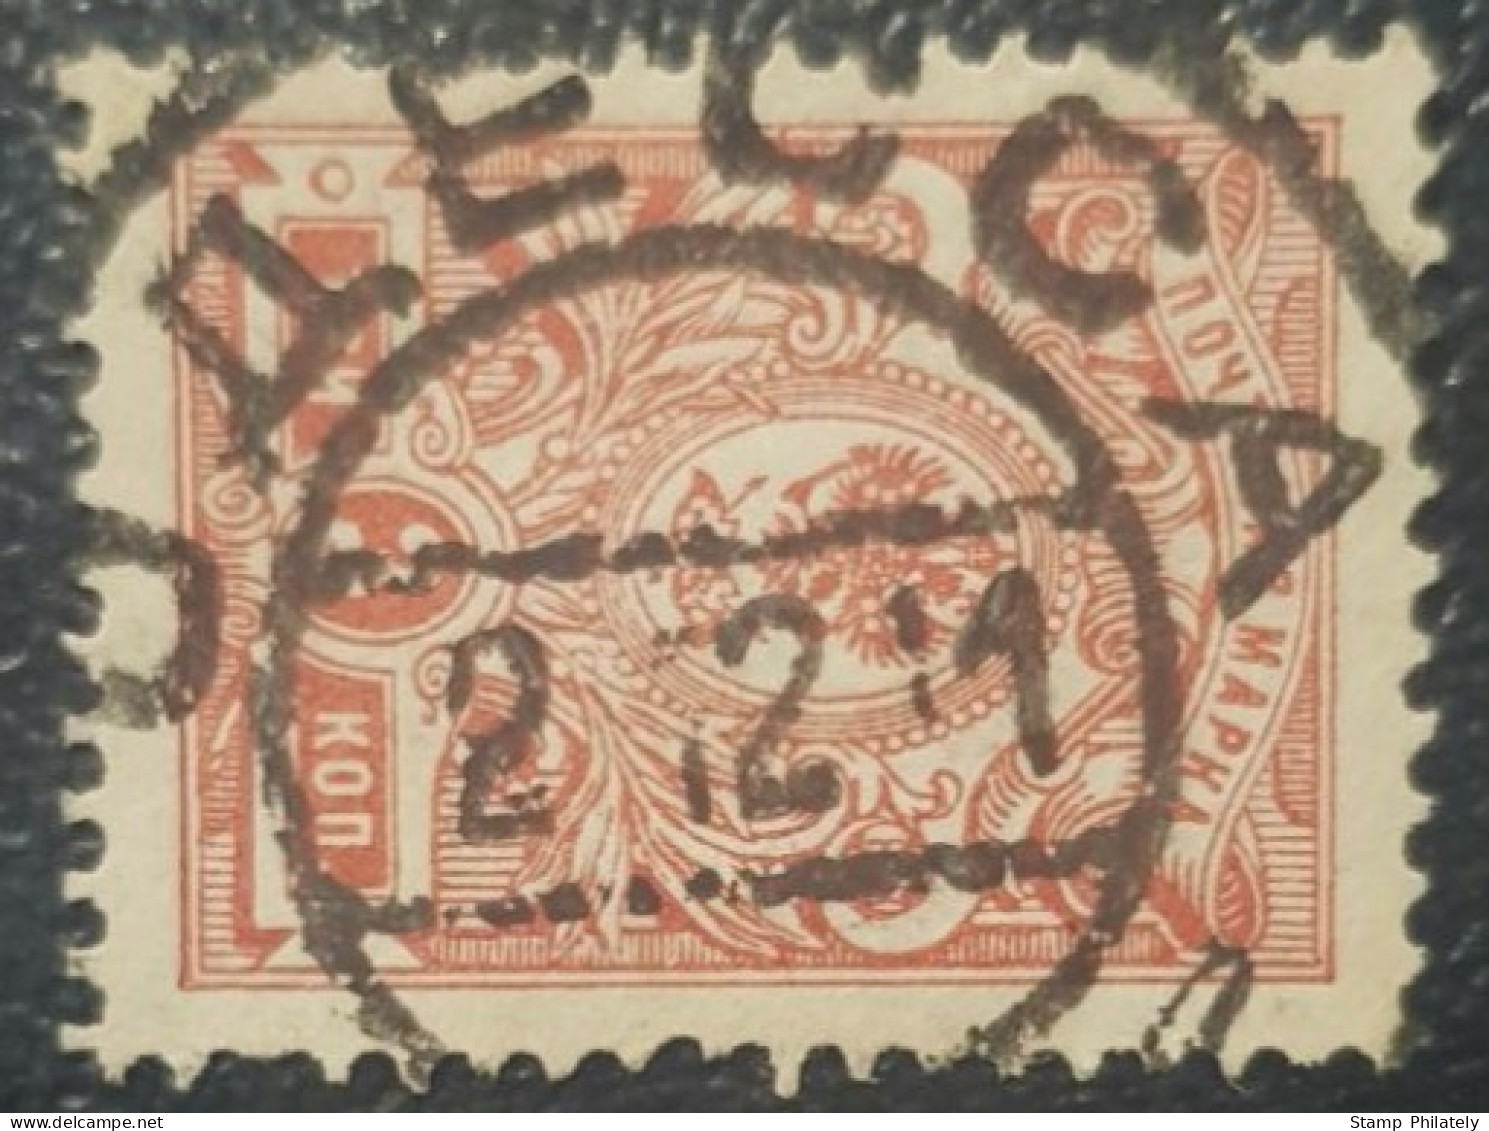 Russia Classic Used Postmark Stamp - Ungebraucht